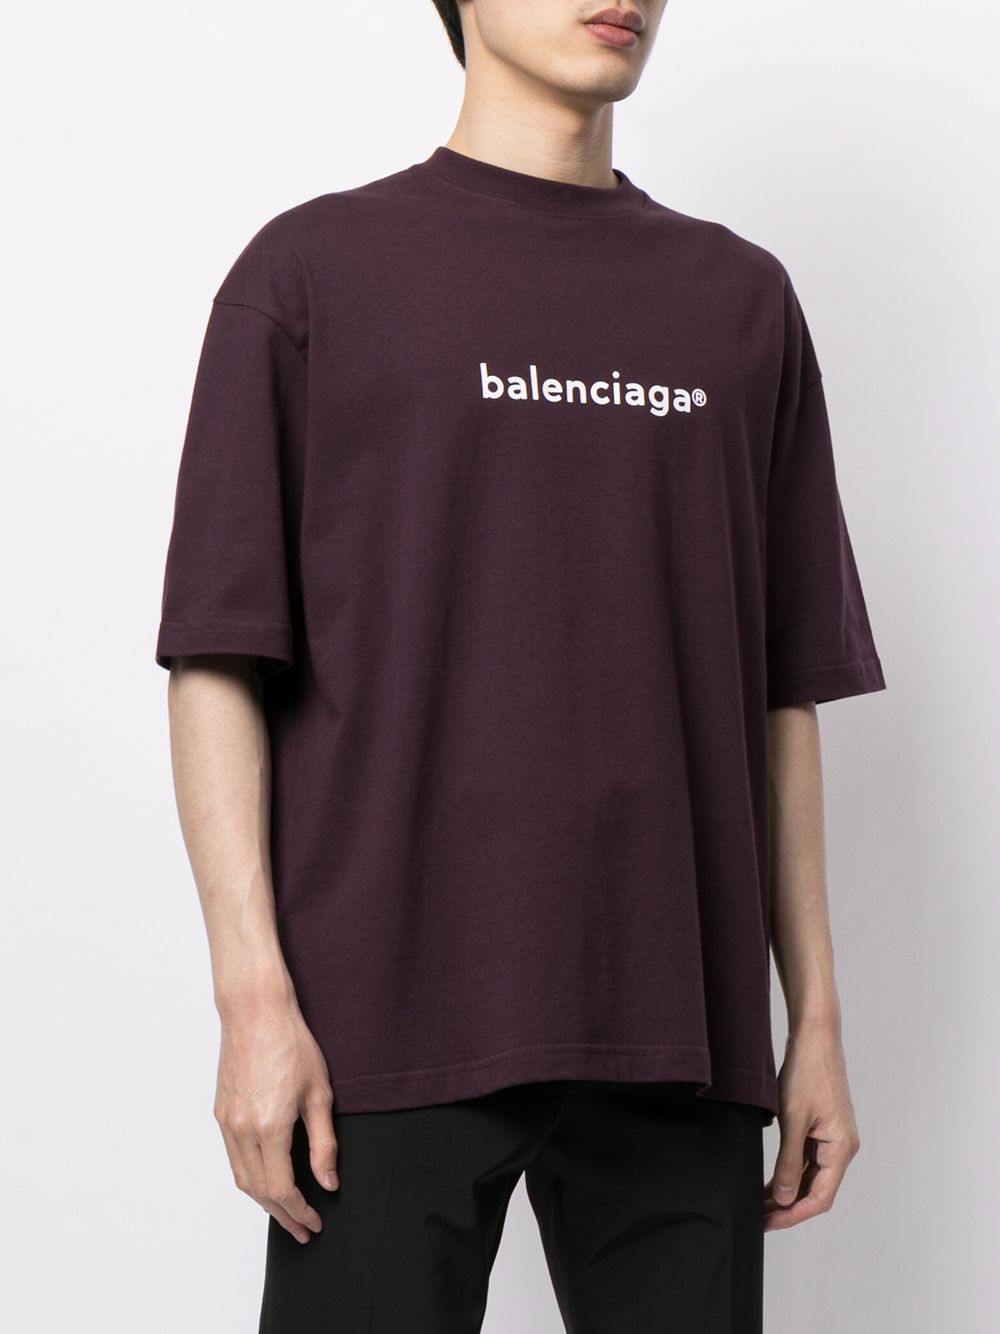 Balenciaga New Copyright Black TShirt  Labels  Co